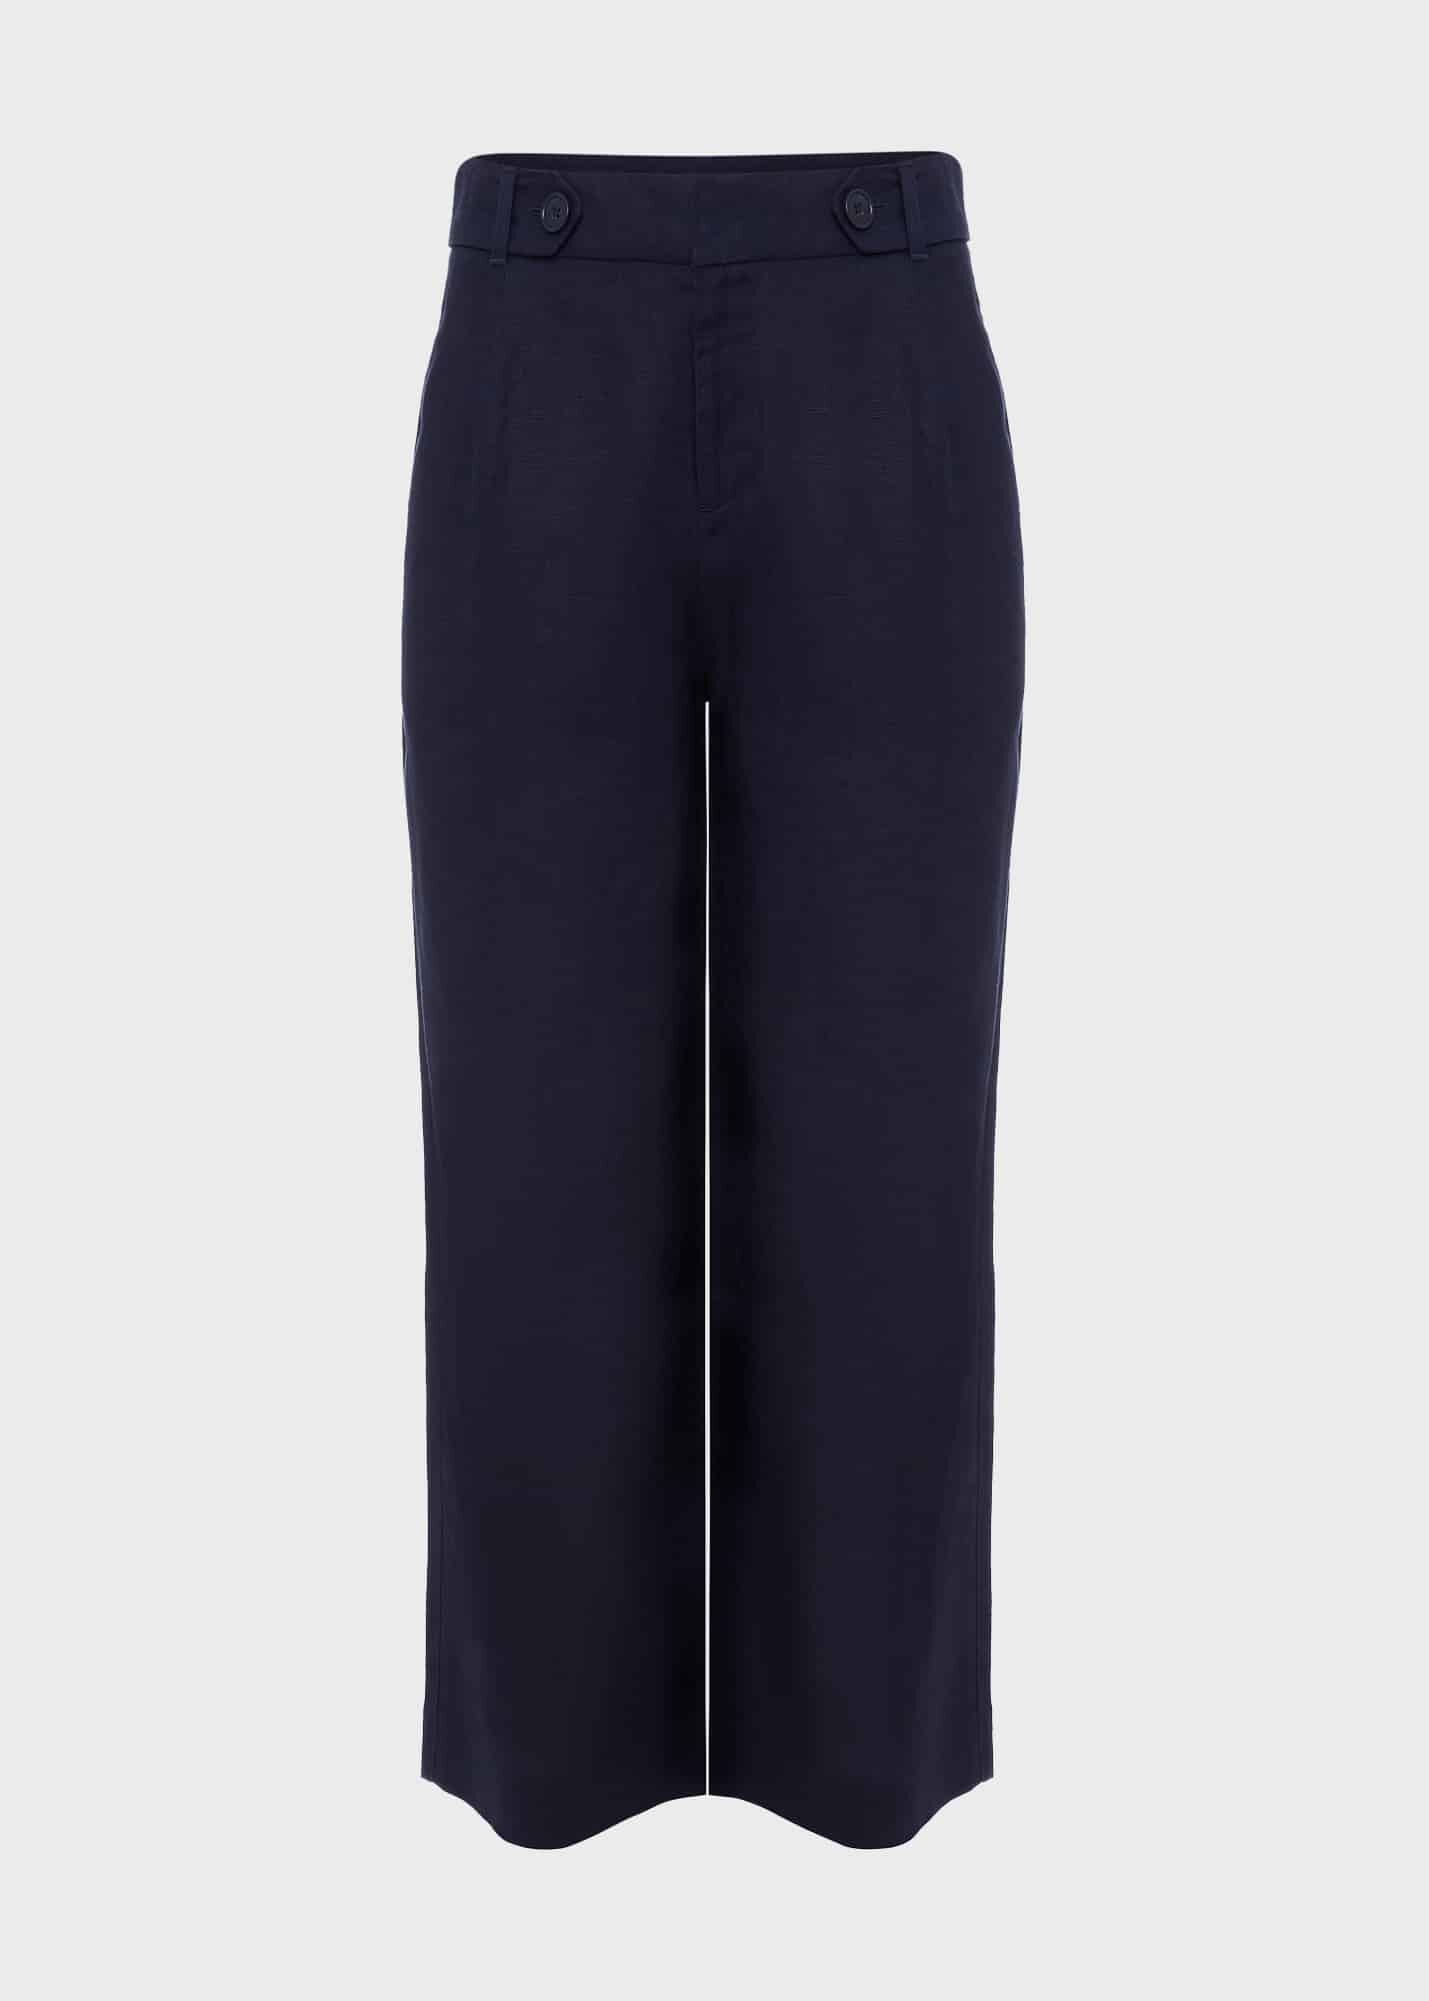 Maison Martin Margiela dark blue trousers with cut off adjustable waist —  spring 2018 - V A N II T A S